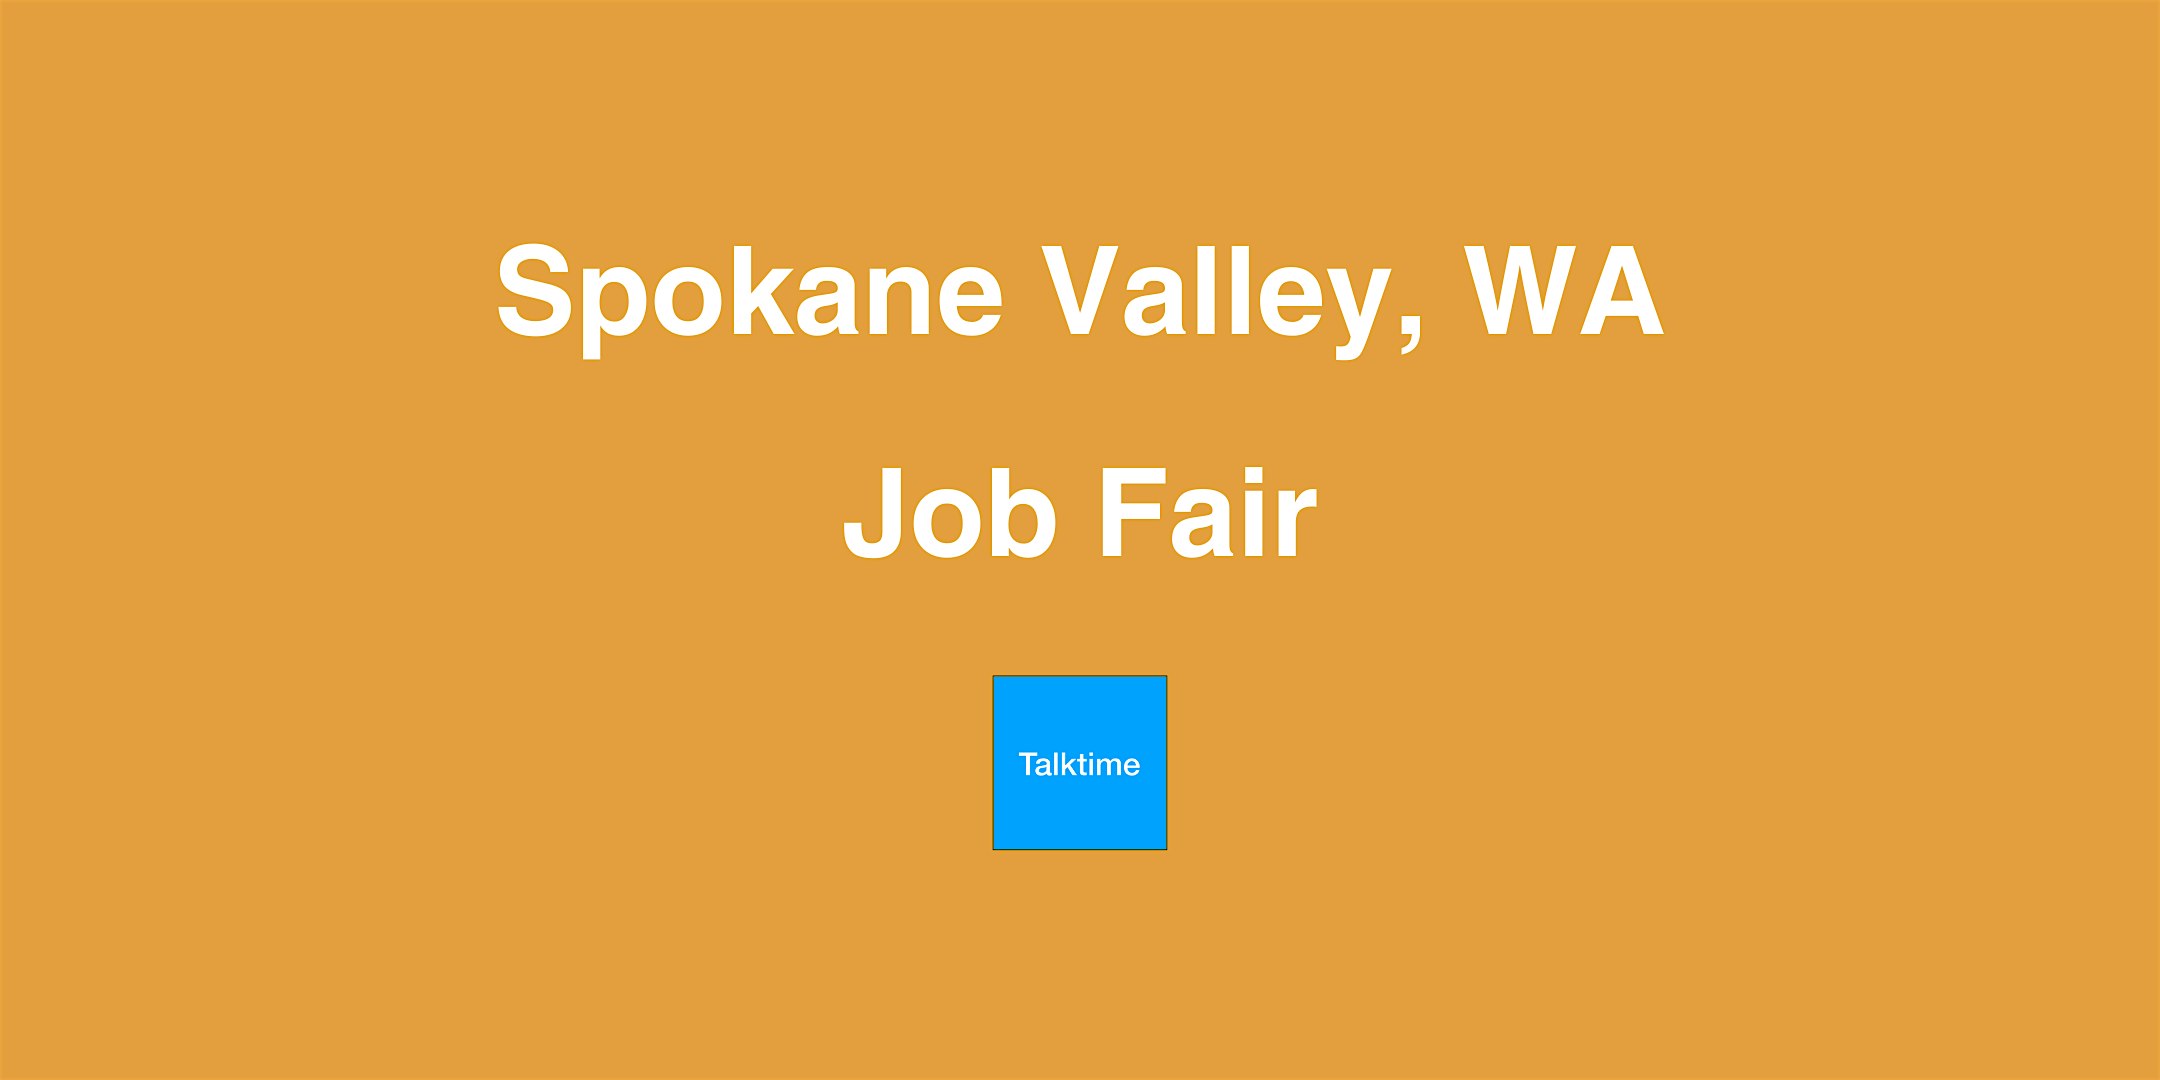 Job Fair - Spokane Valley